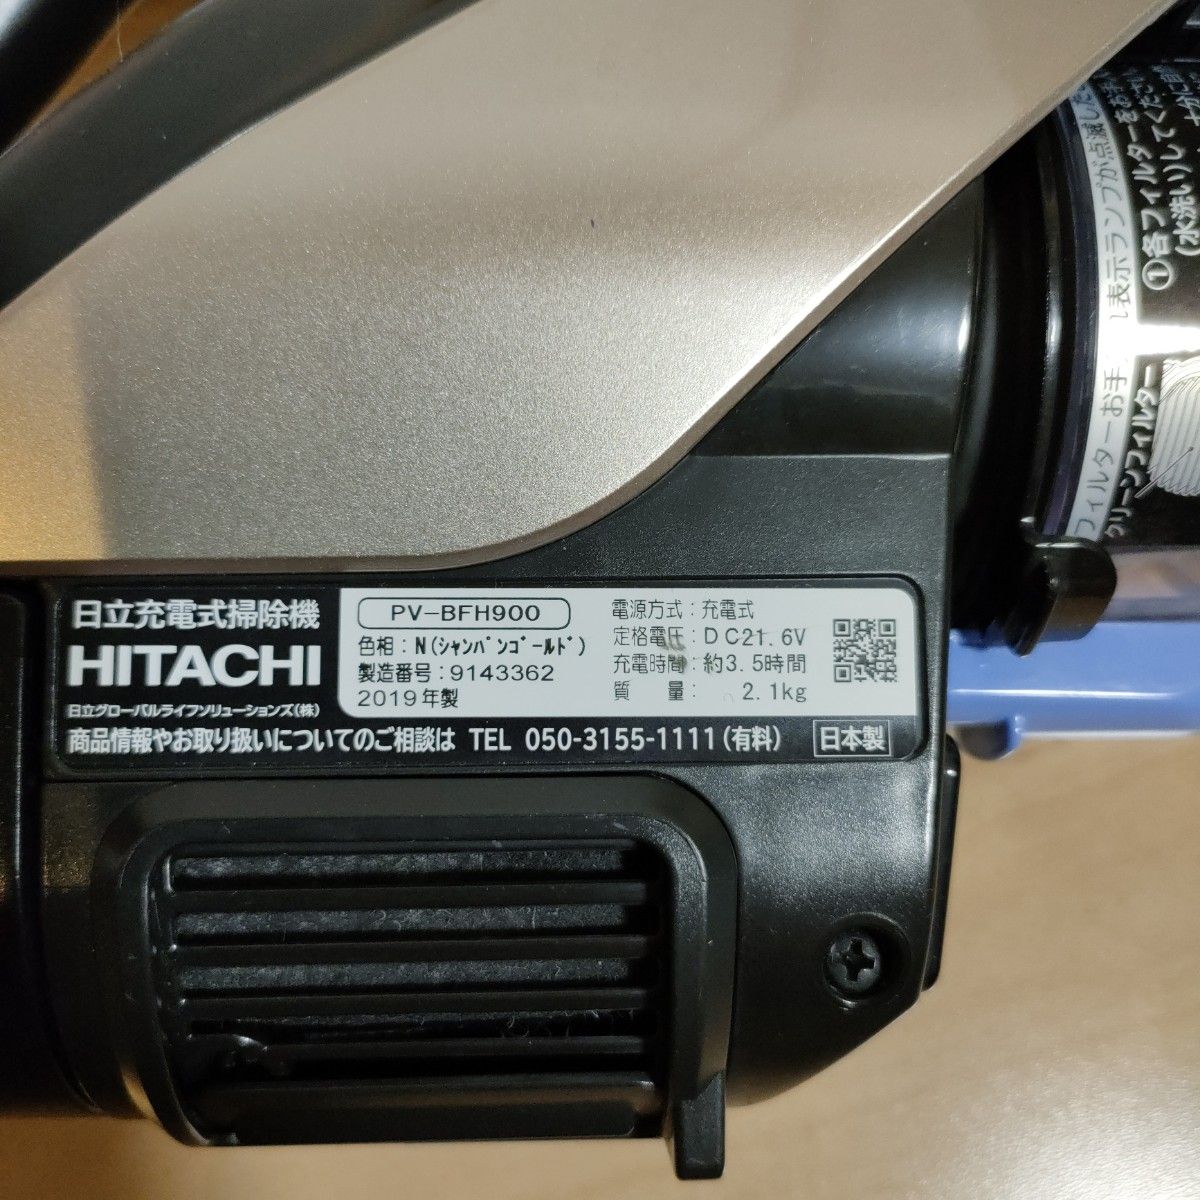 HITACHI 掃除機 サイクロン式 コードレス スティッククリーナー パワーブーストサイクロン